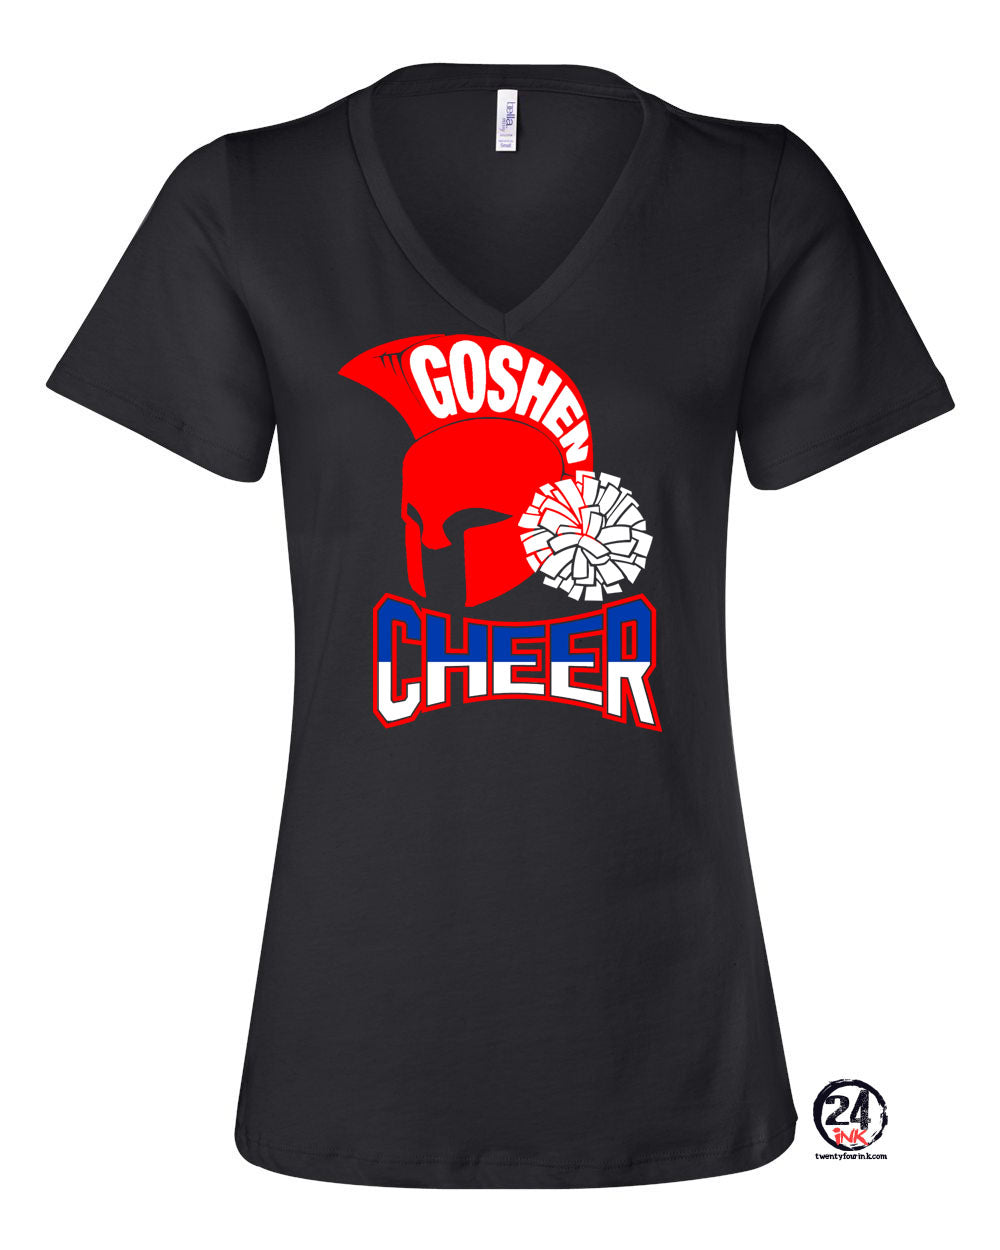 Goshen Cheer Design 8 V-neck T-shirt